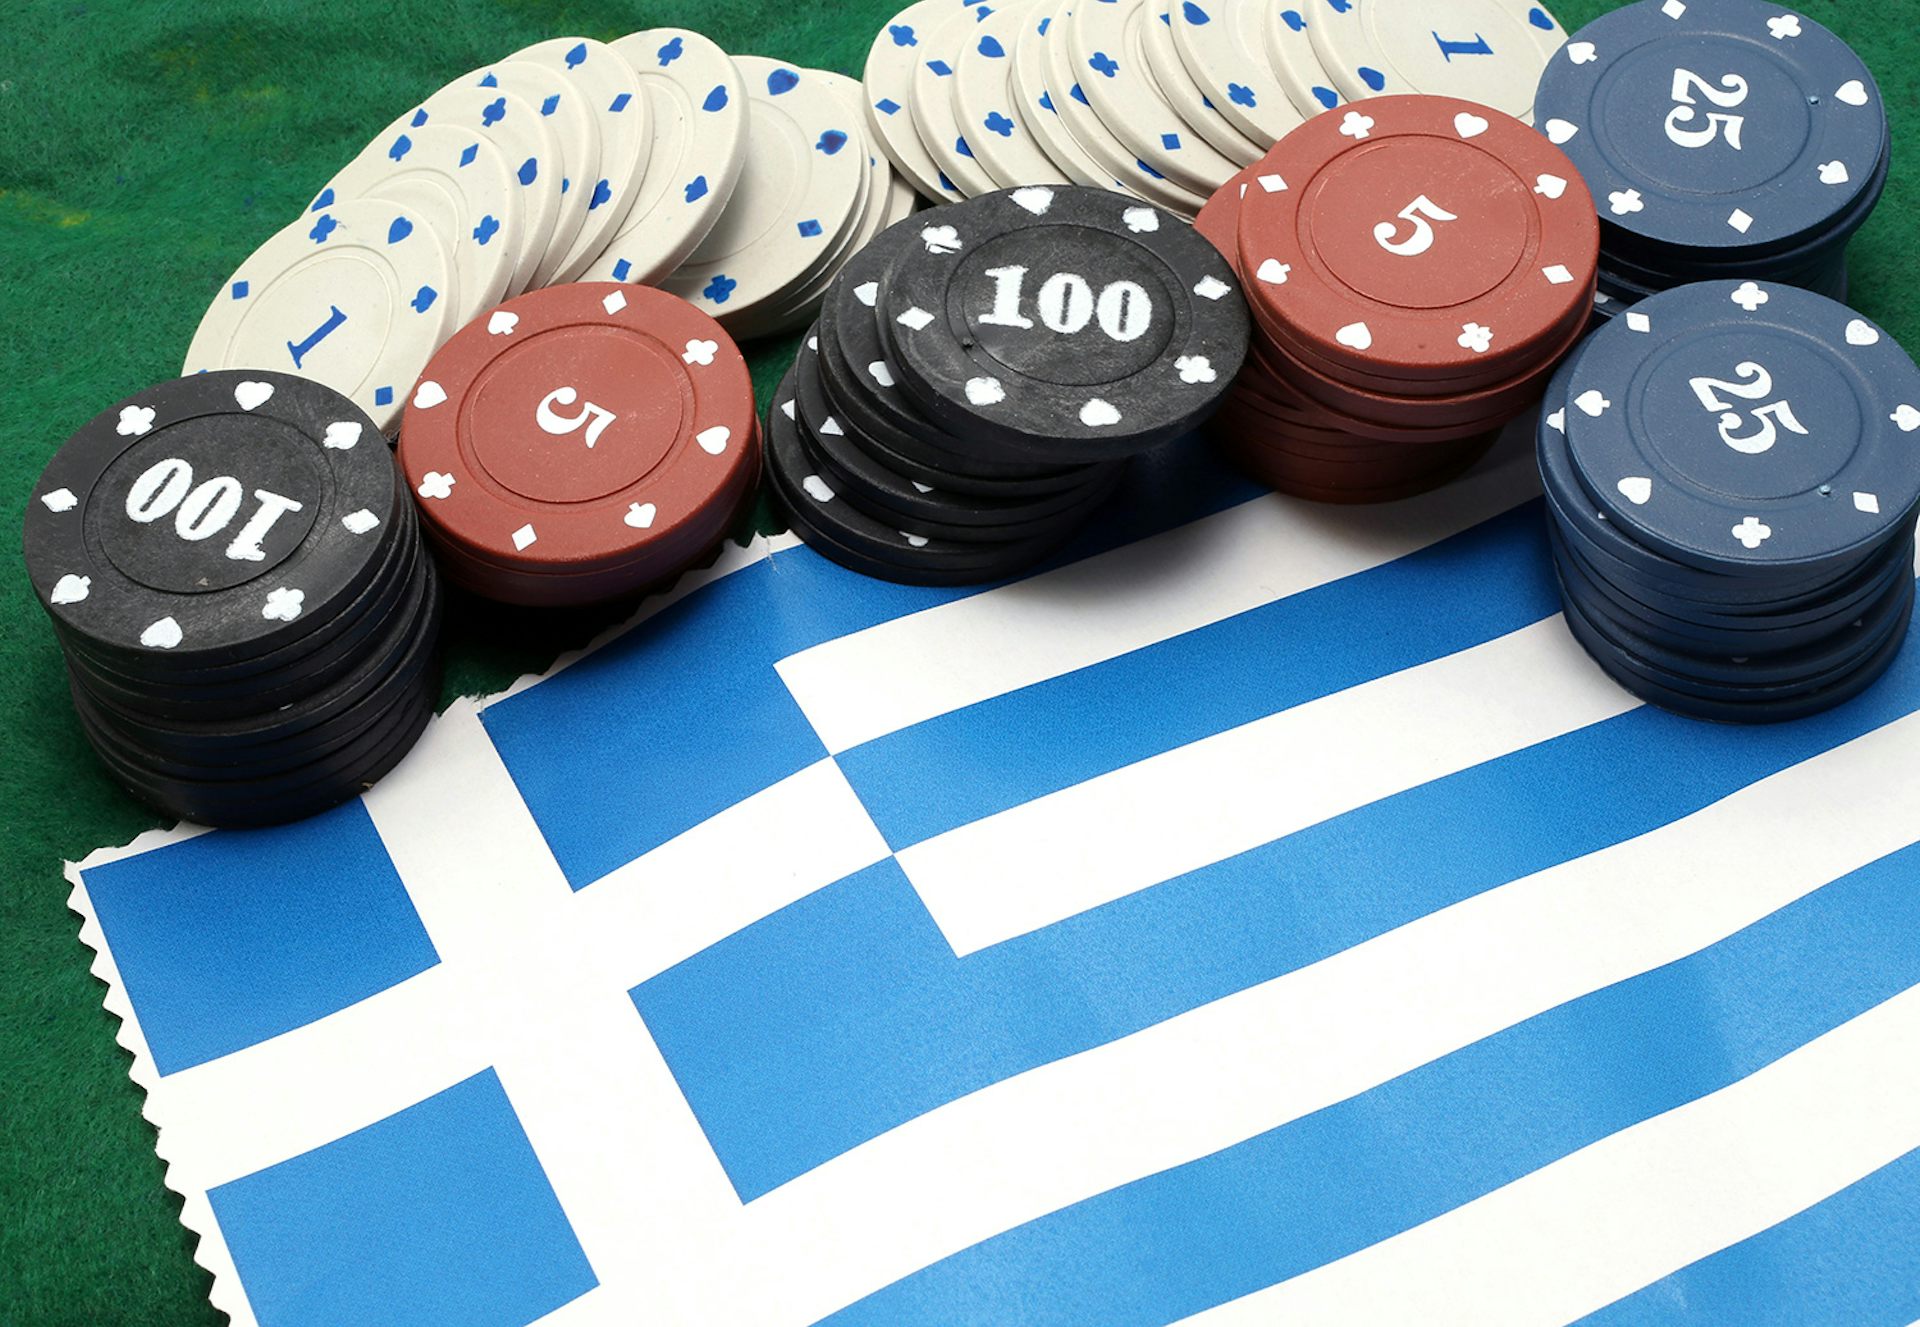 Gambler pays off debt